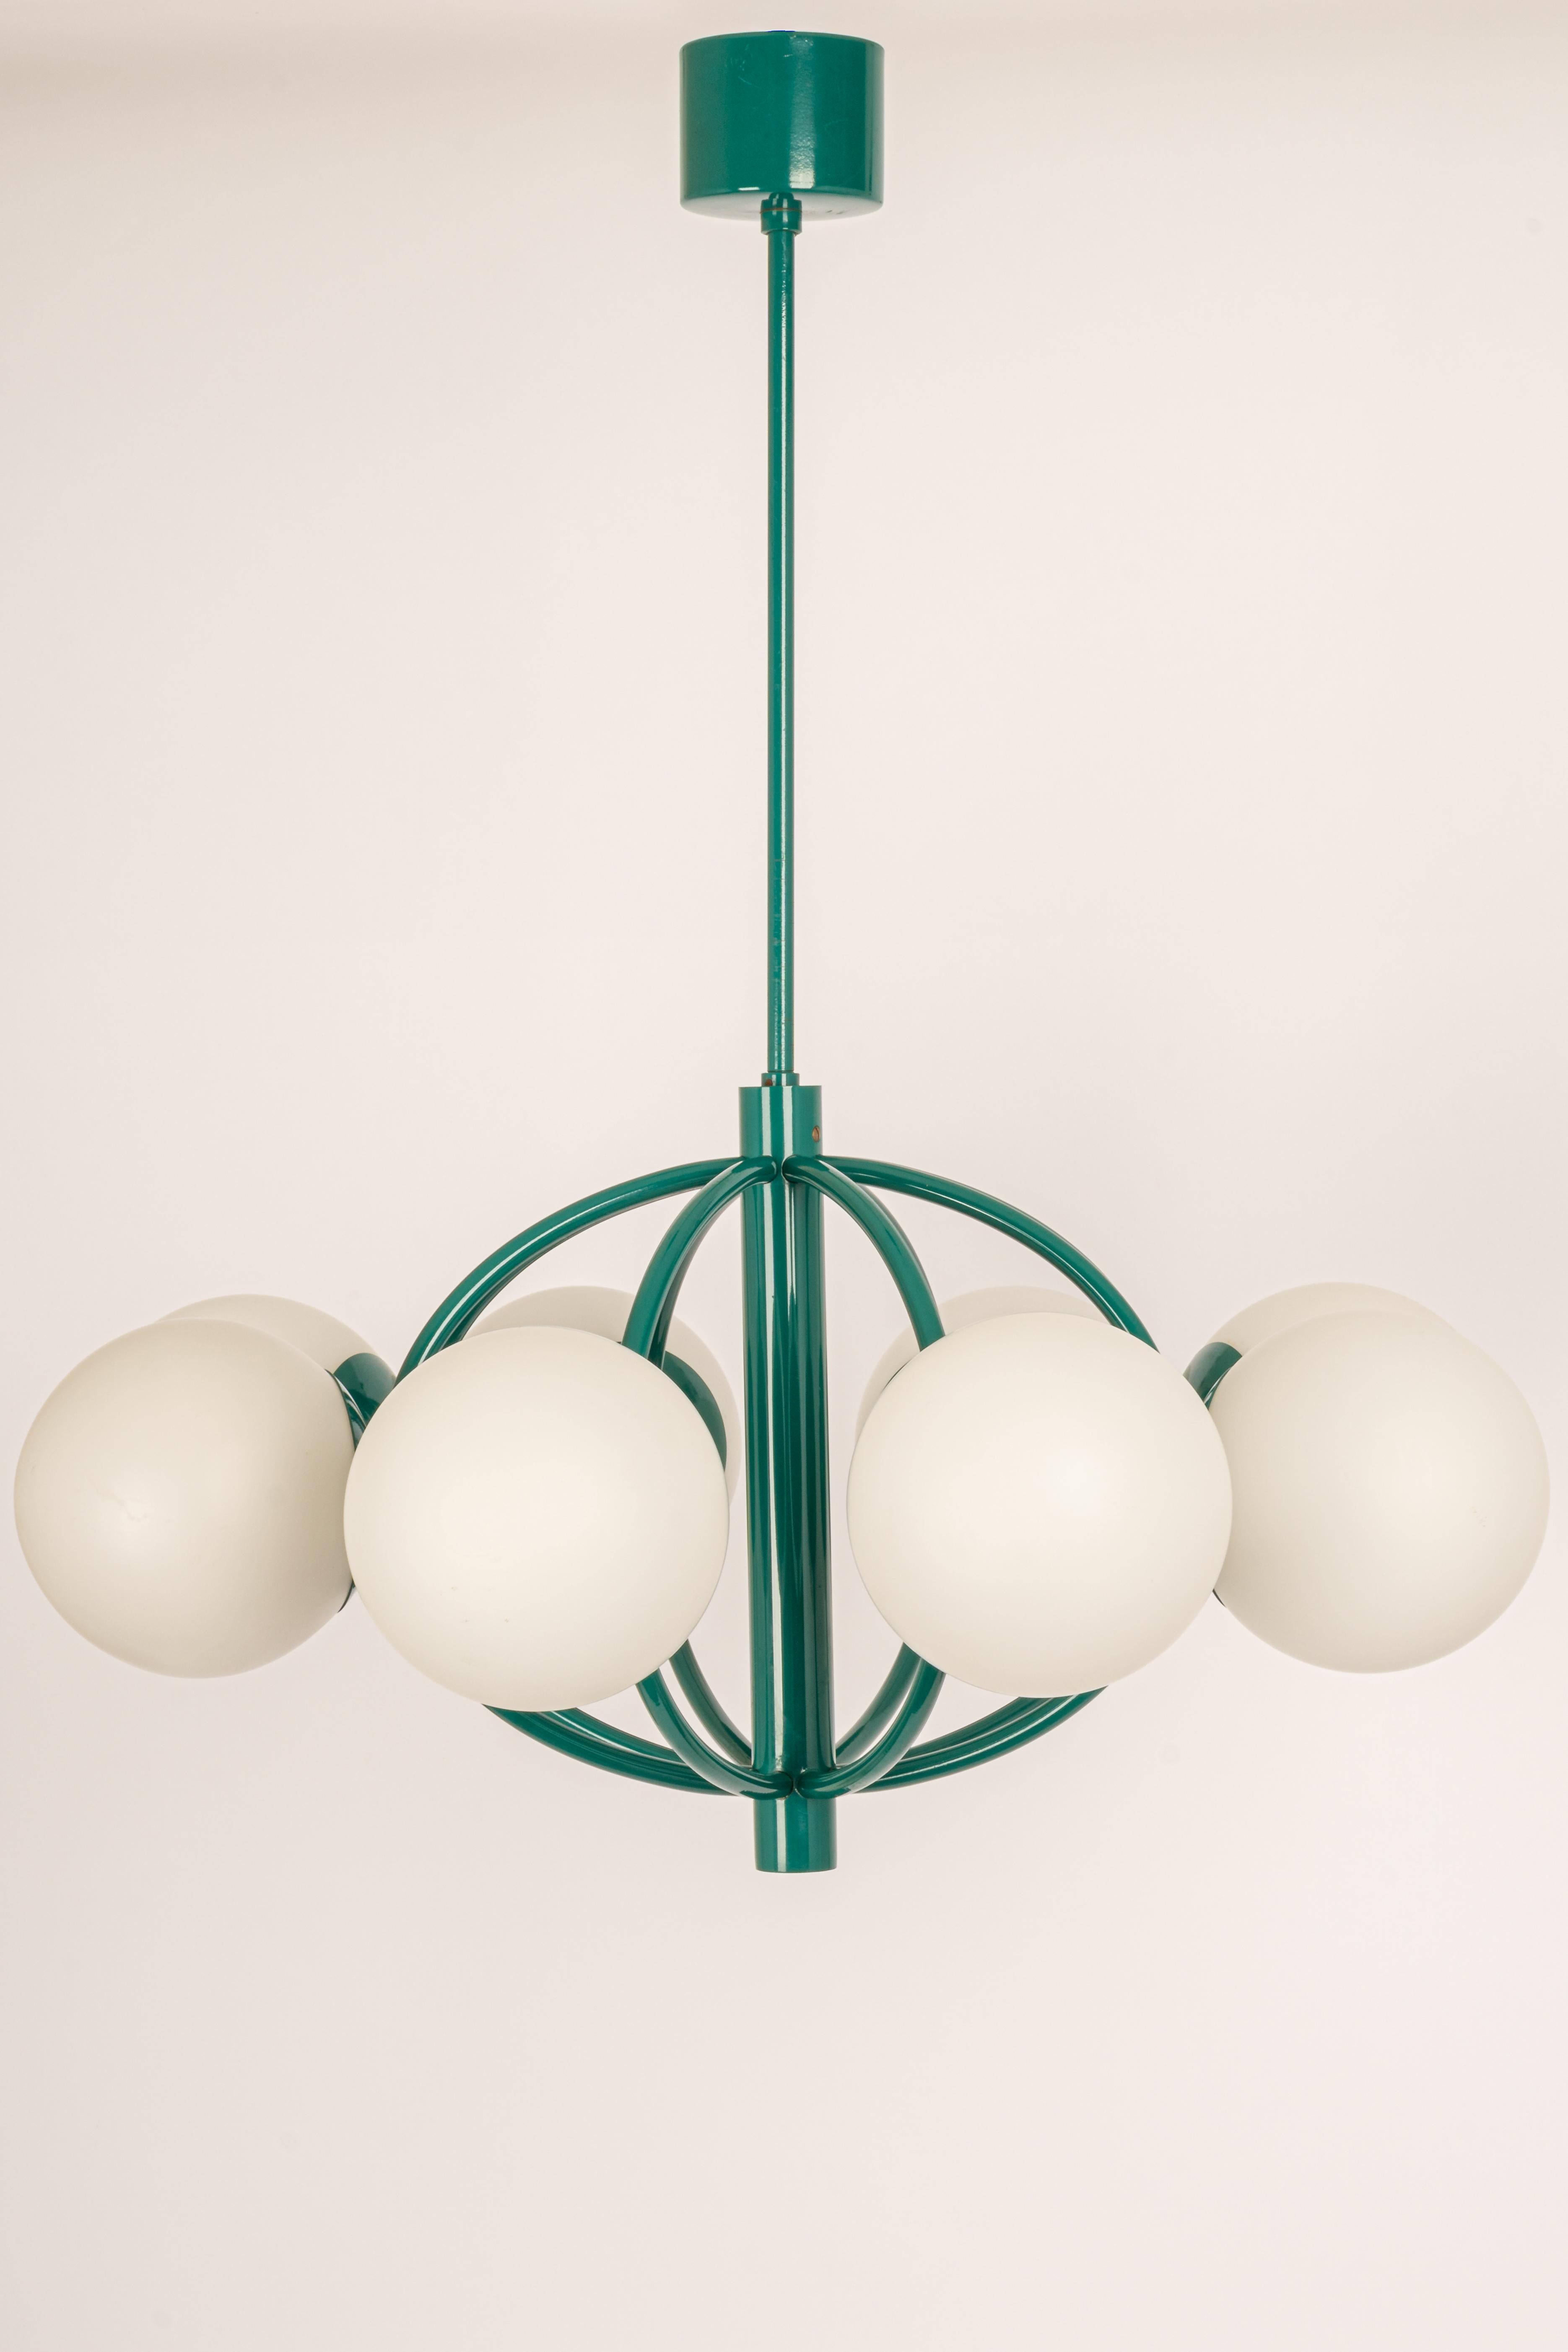 Midcentury Orbital Ceiling Lamp Pendant in Green by Kaiser, Germany, 1960s 1